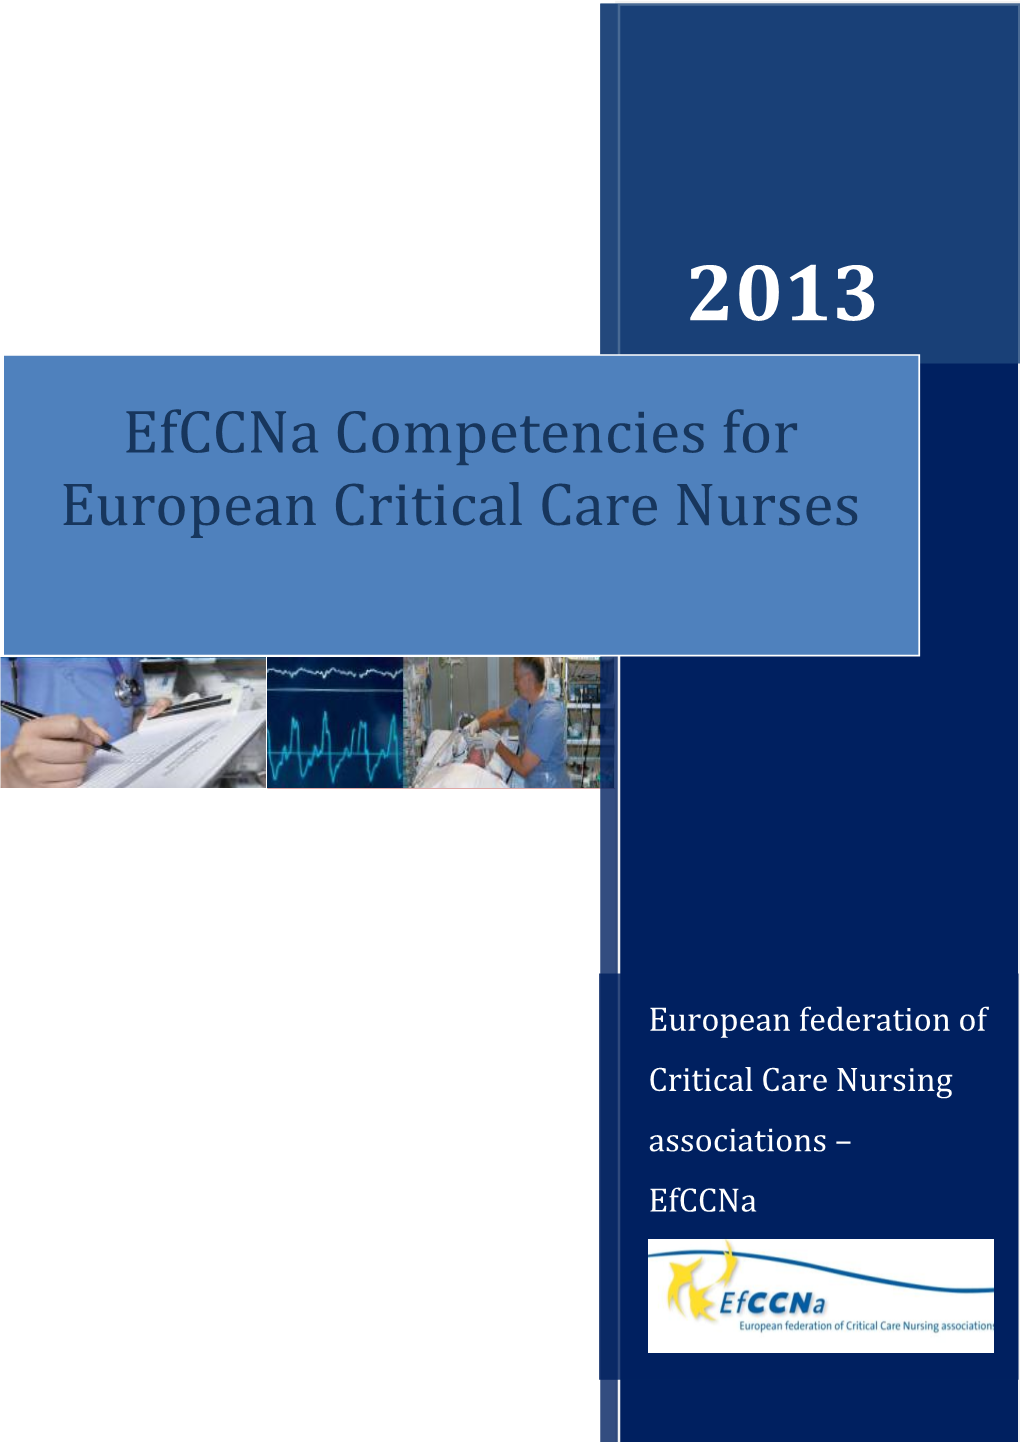 Efccna Competency Tool for European Critical Care Nurses 2013